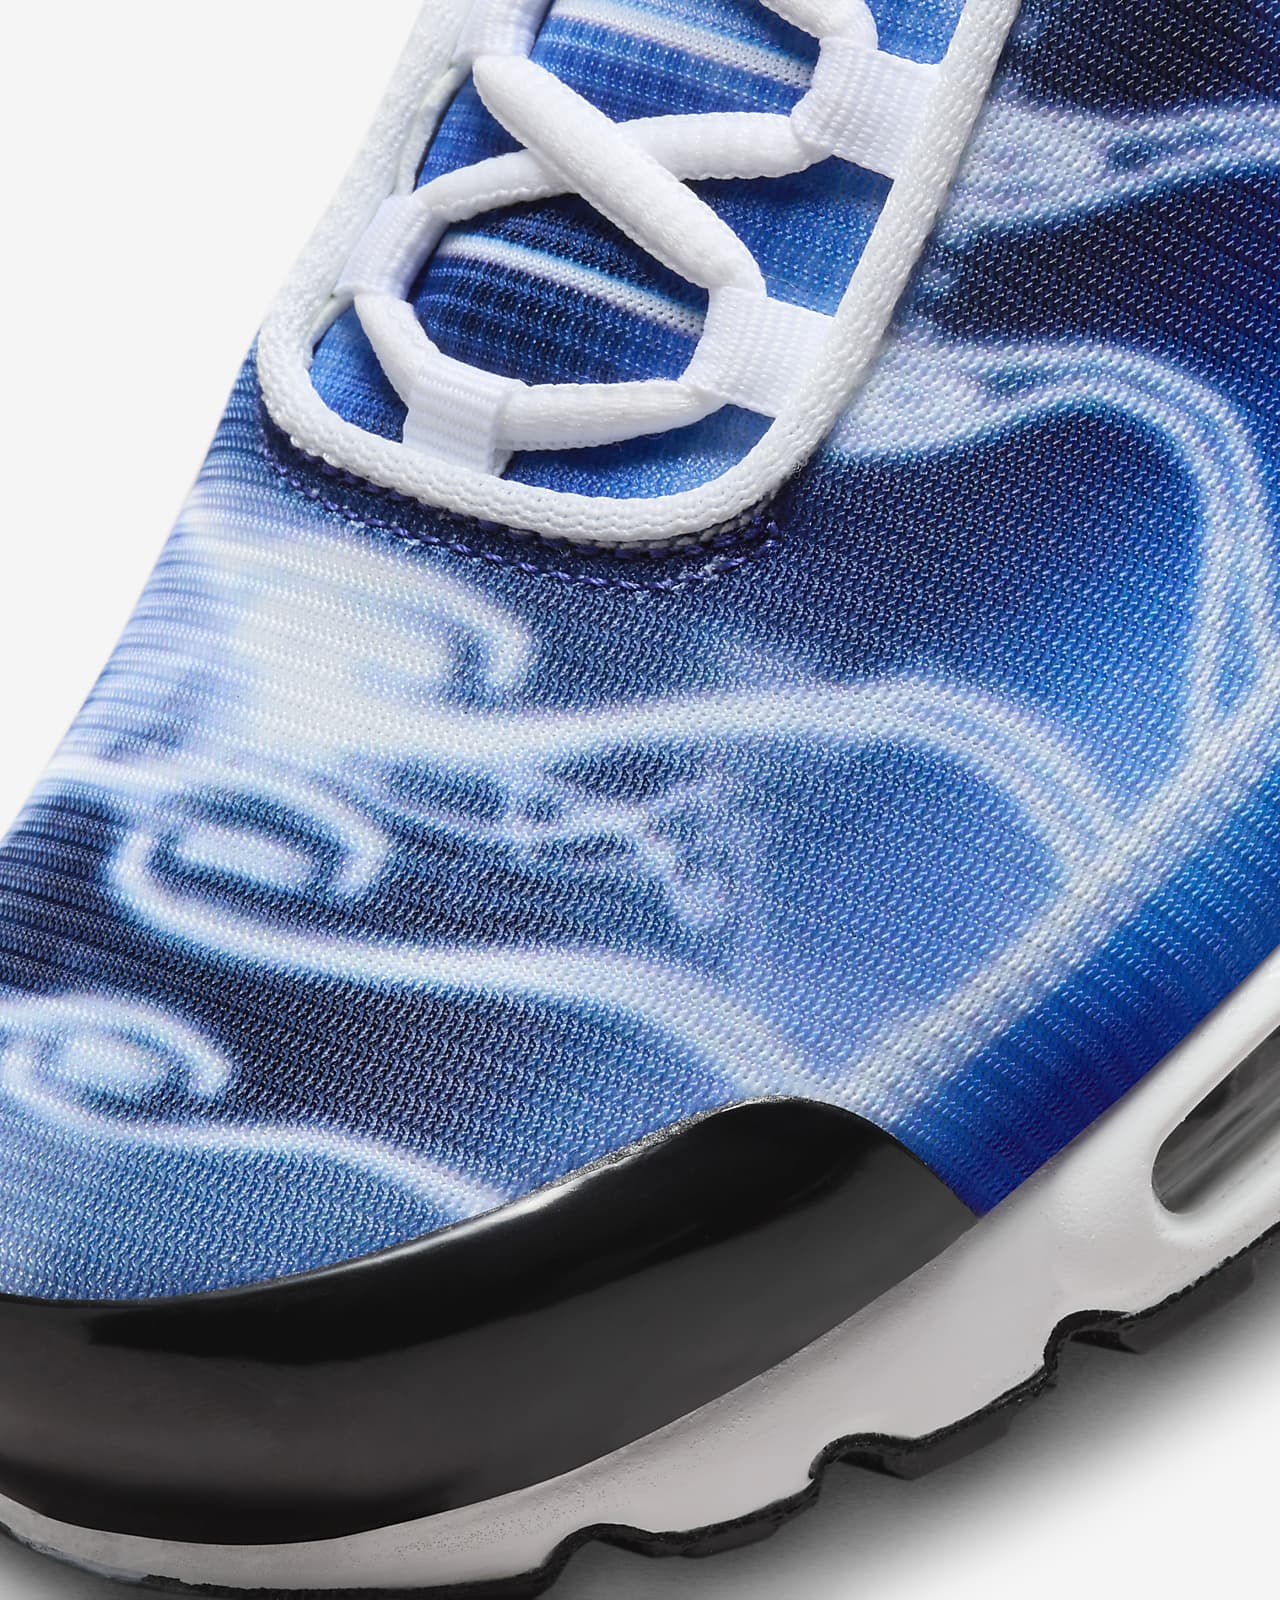 Nike Air Max Plus OG ナイキエアマックスプラスピメント5〜10回程度使用しております